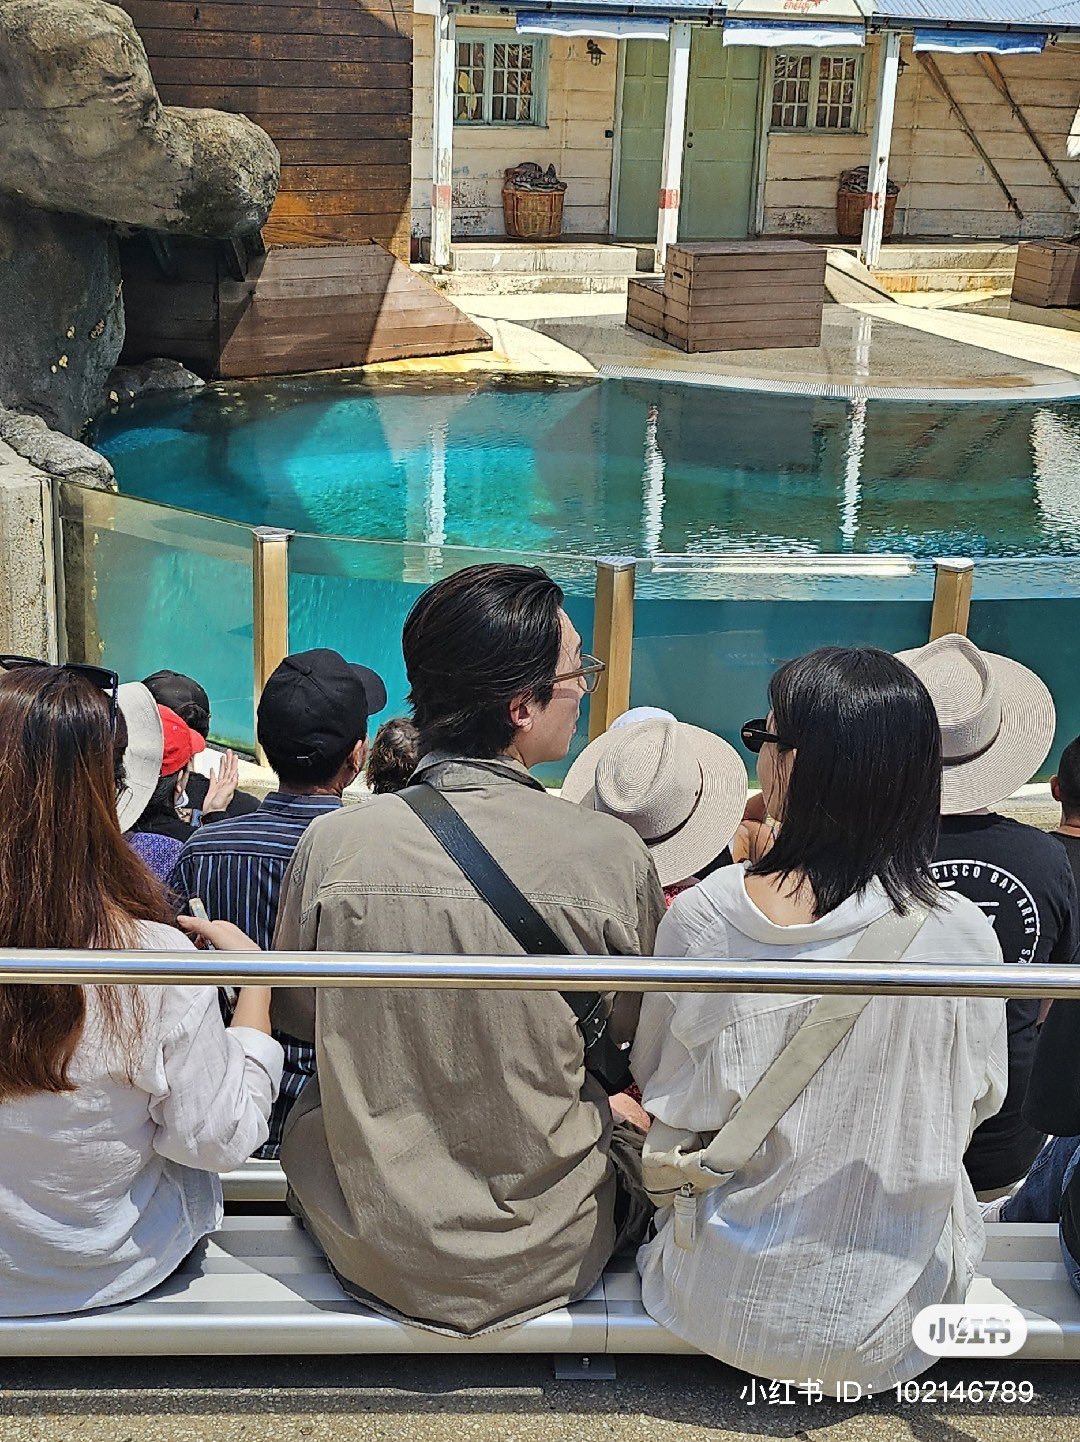 Суён и Чон Кён Хо замечены на свидании в зоопарке Сиднея